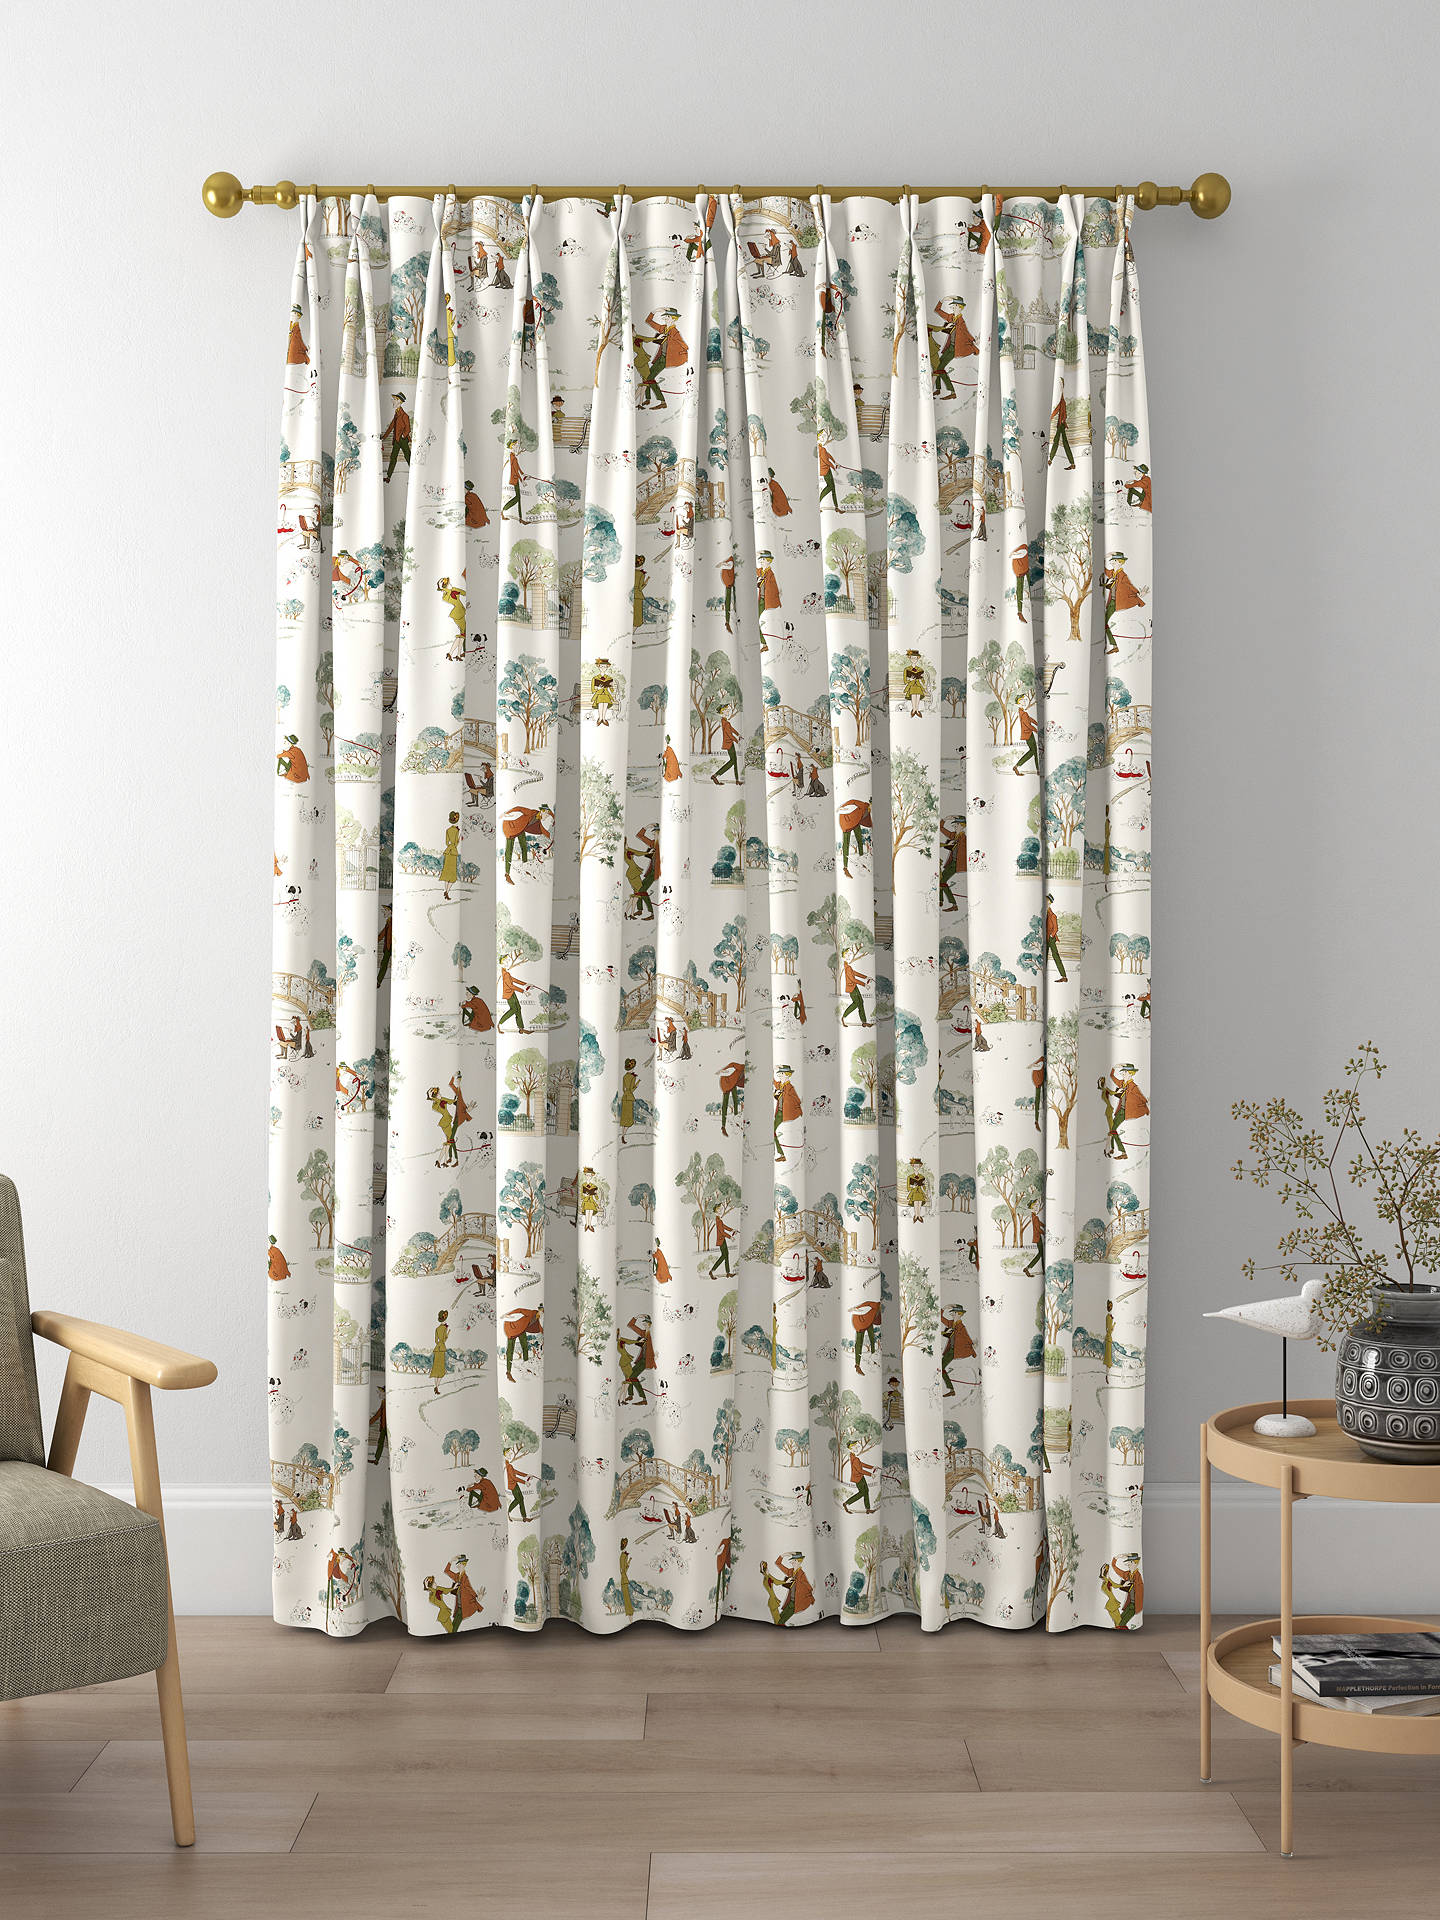 Sanderson 101 Dalmatians Made to Measure Curtains, Breeze Blue